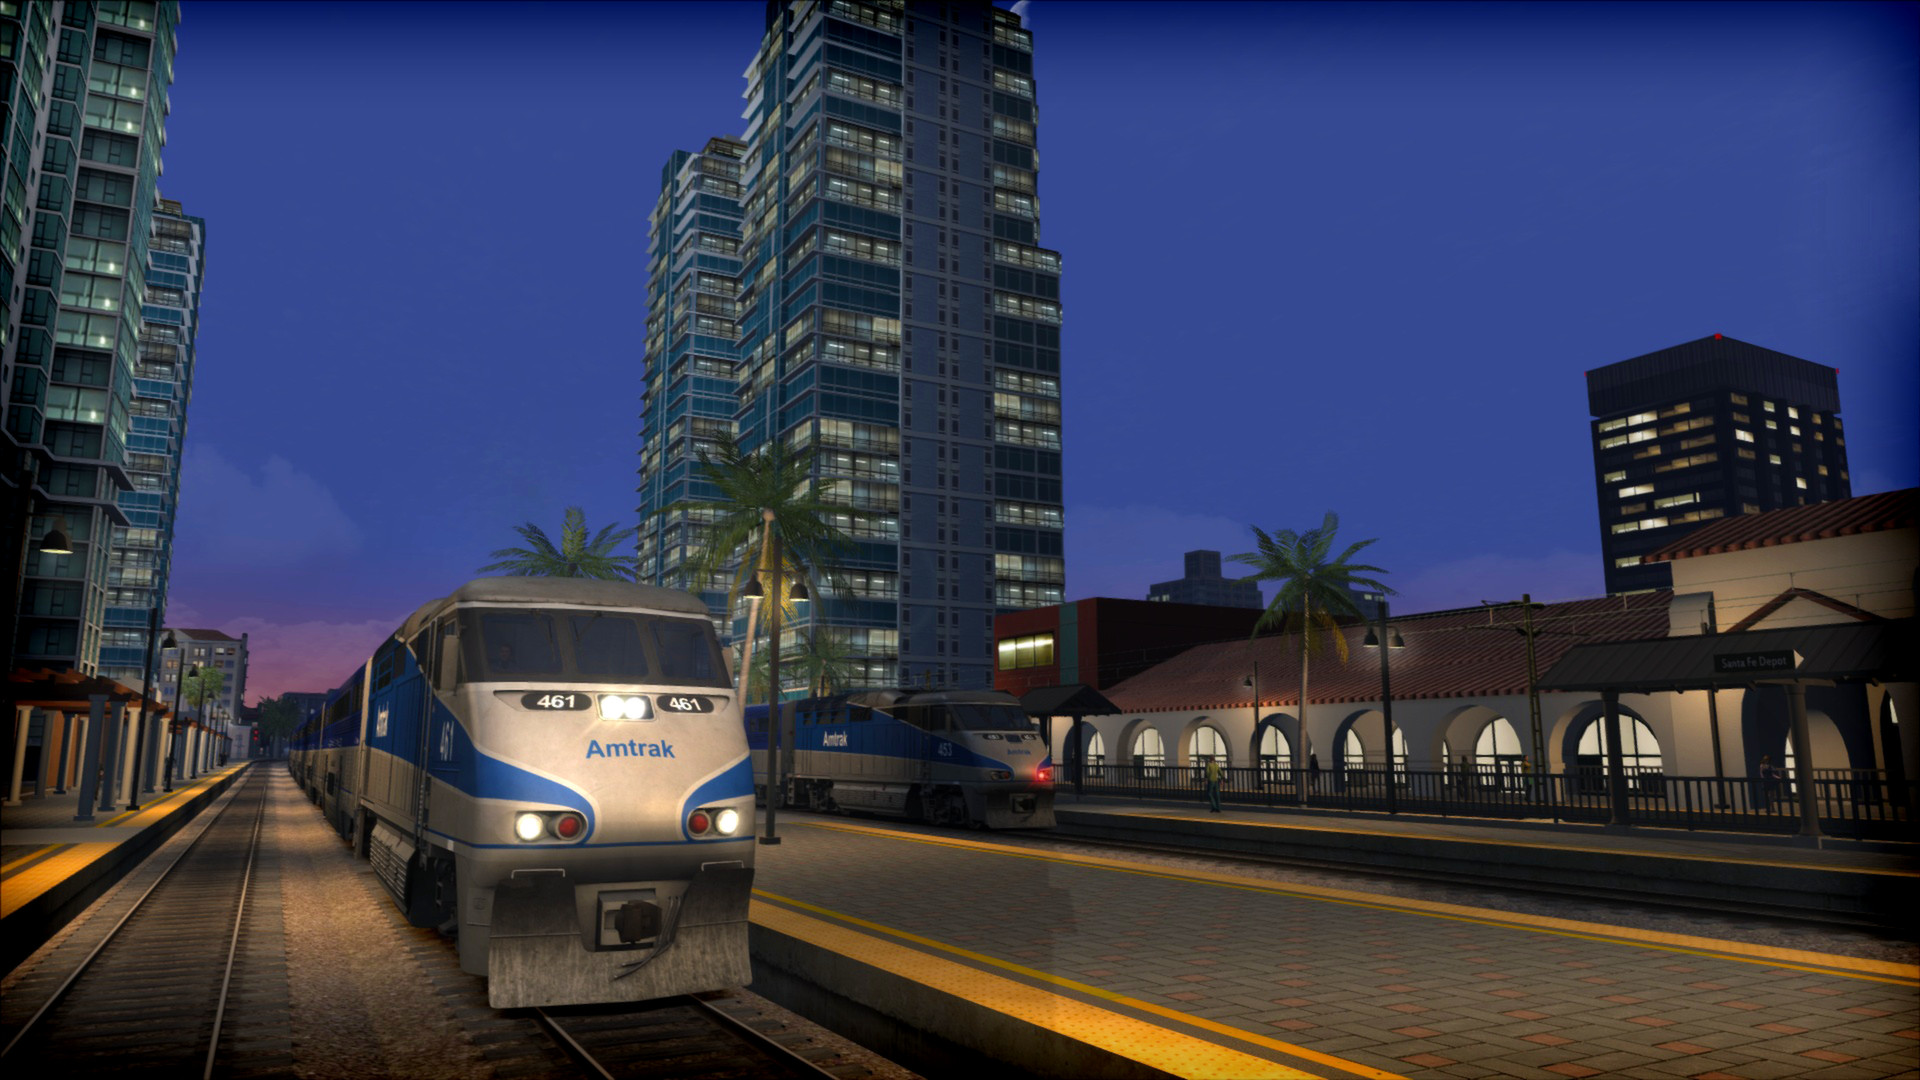 Train Simulator: Pacific Surfliner LA - San Diego Route Free Download [key]